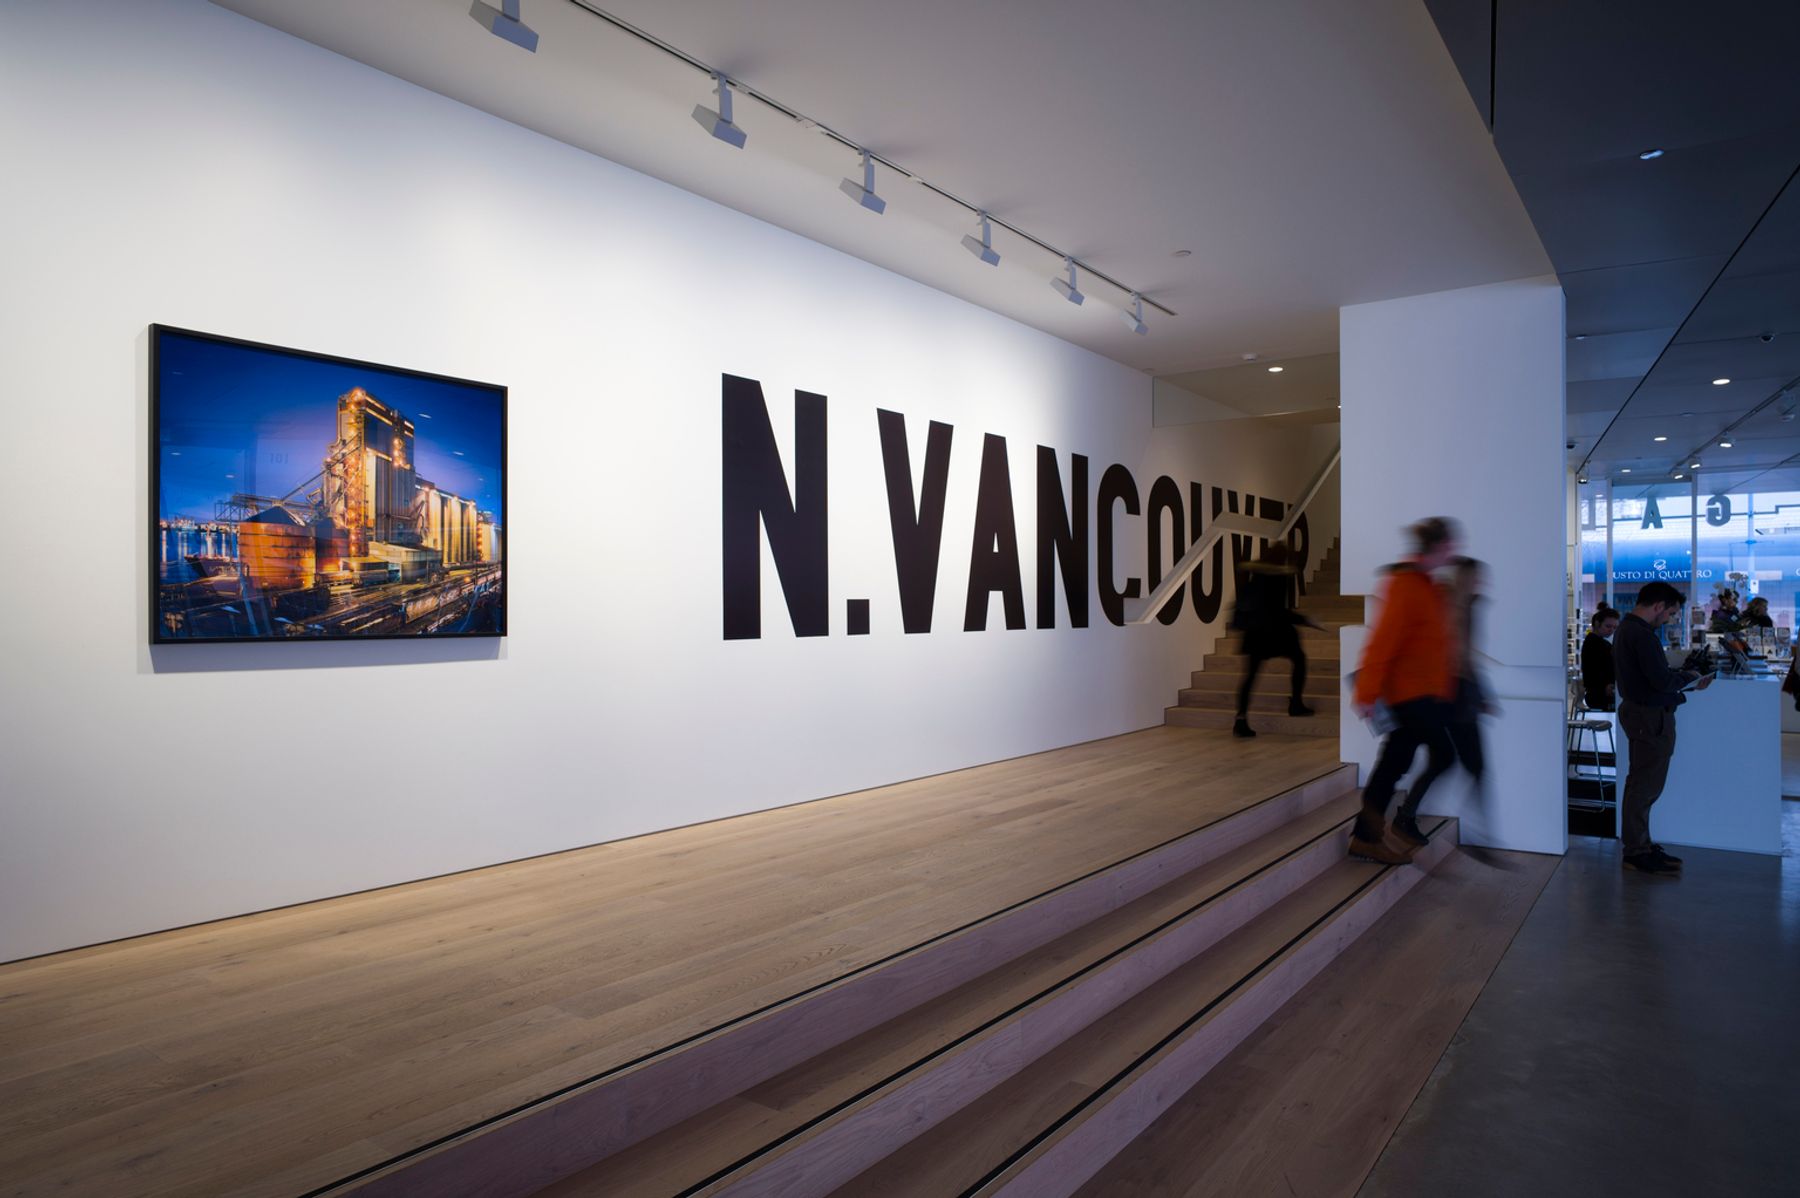 The Polygon Gallery, Vancouver. Architettura: Patkau Architects, Vancouver. Fotografia: Moritz Hillebrand, Zurigo.